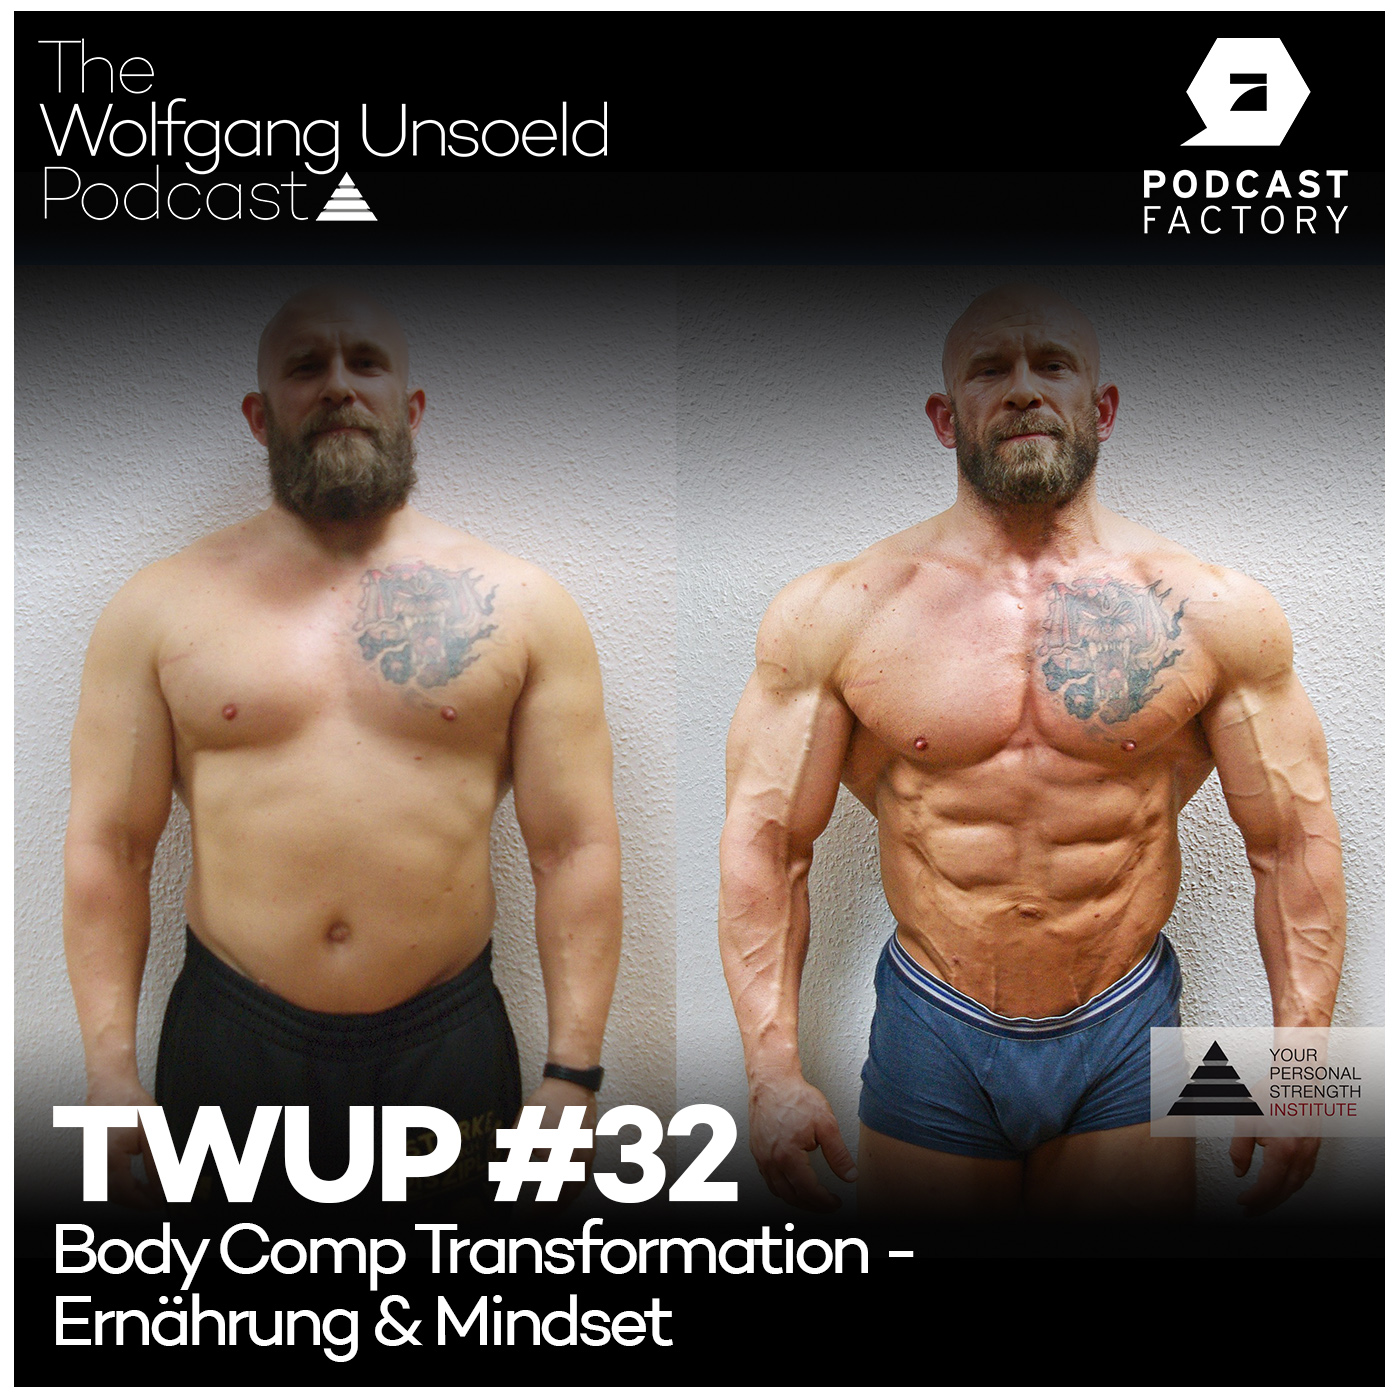 Body Comp Transformation - Ernährung & Mindset - TWUP #32